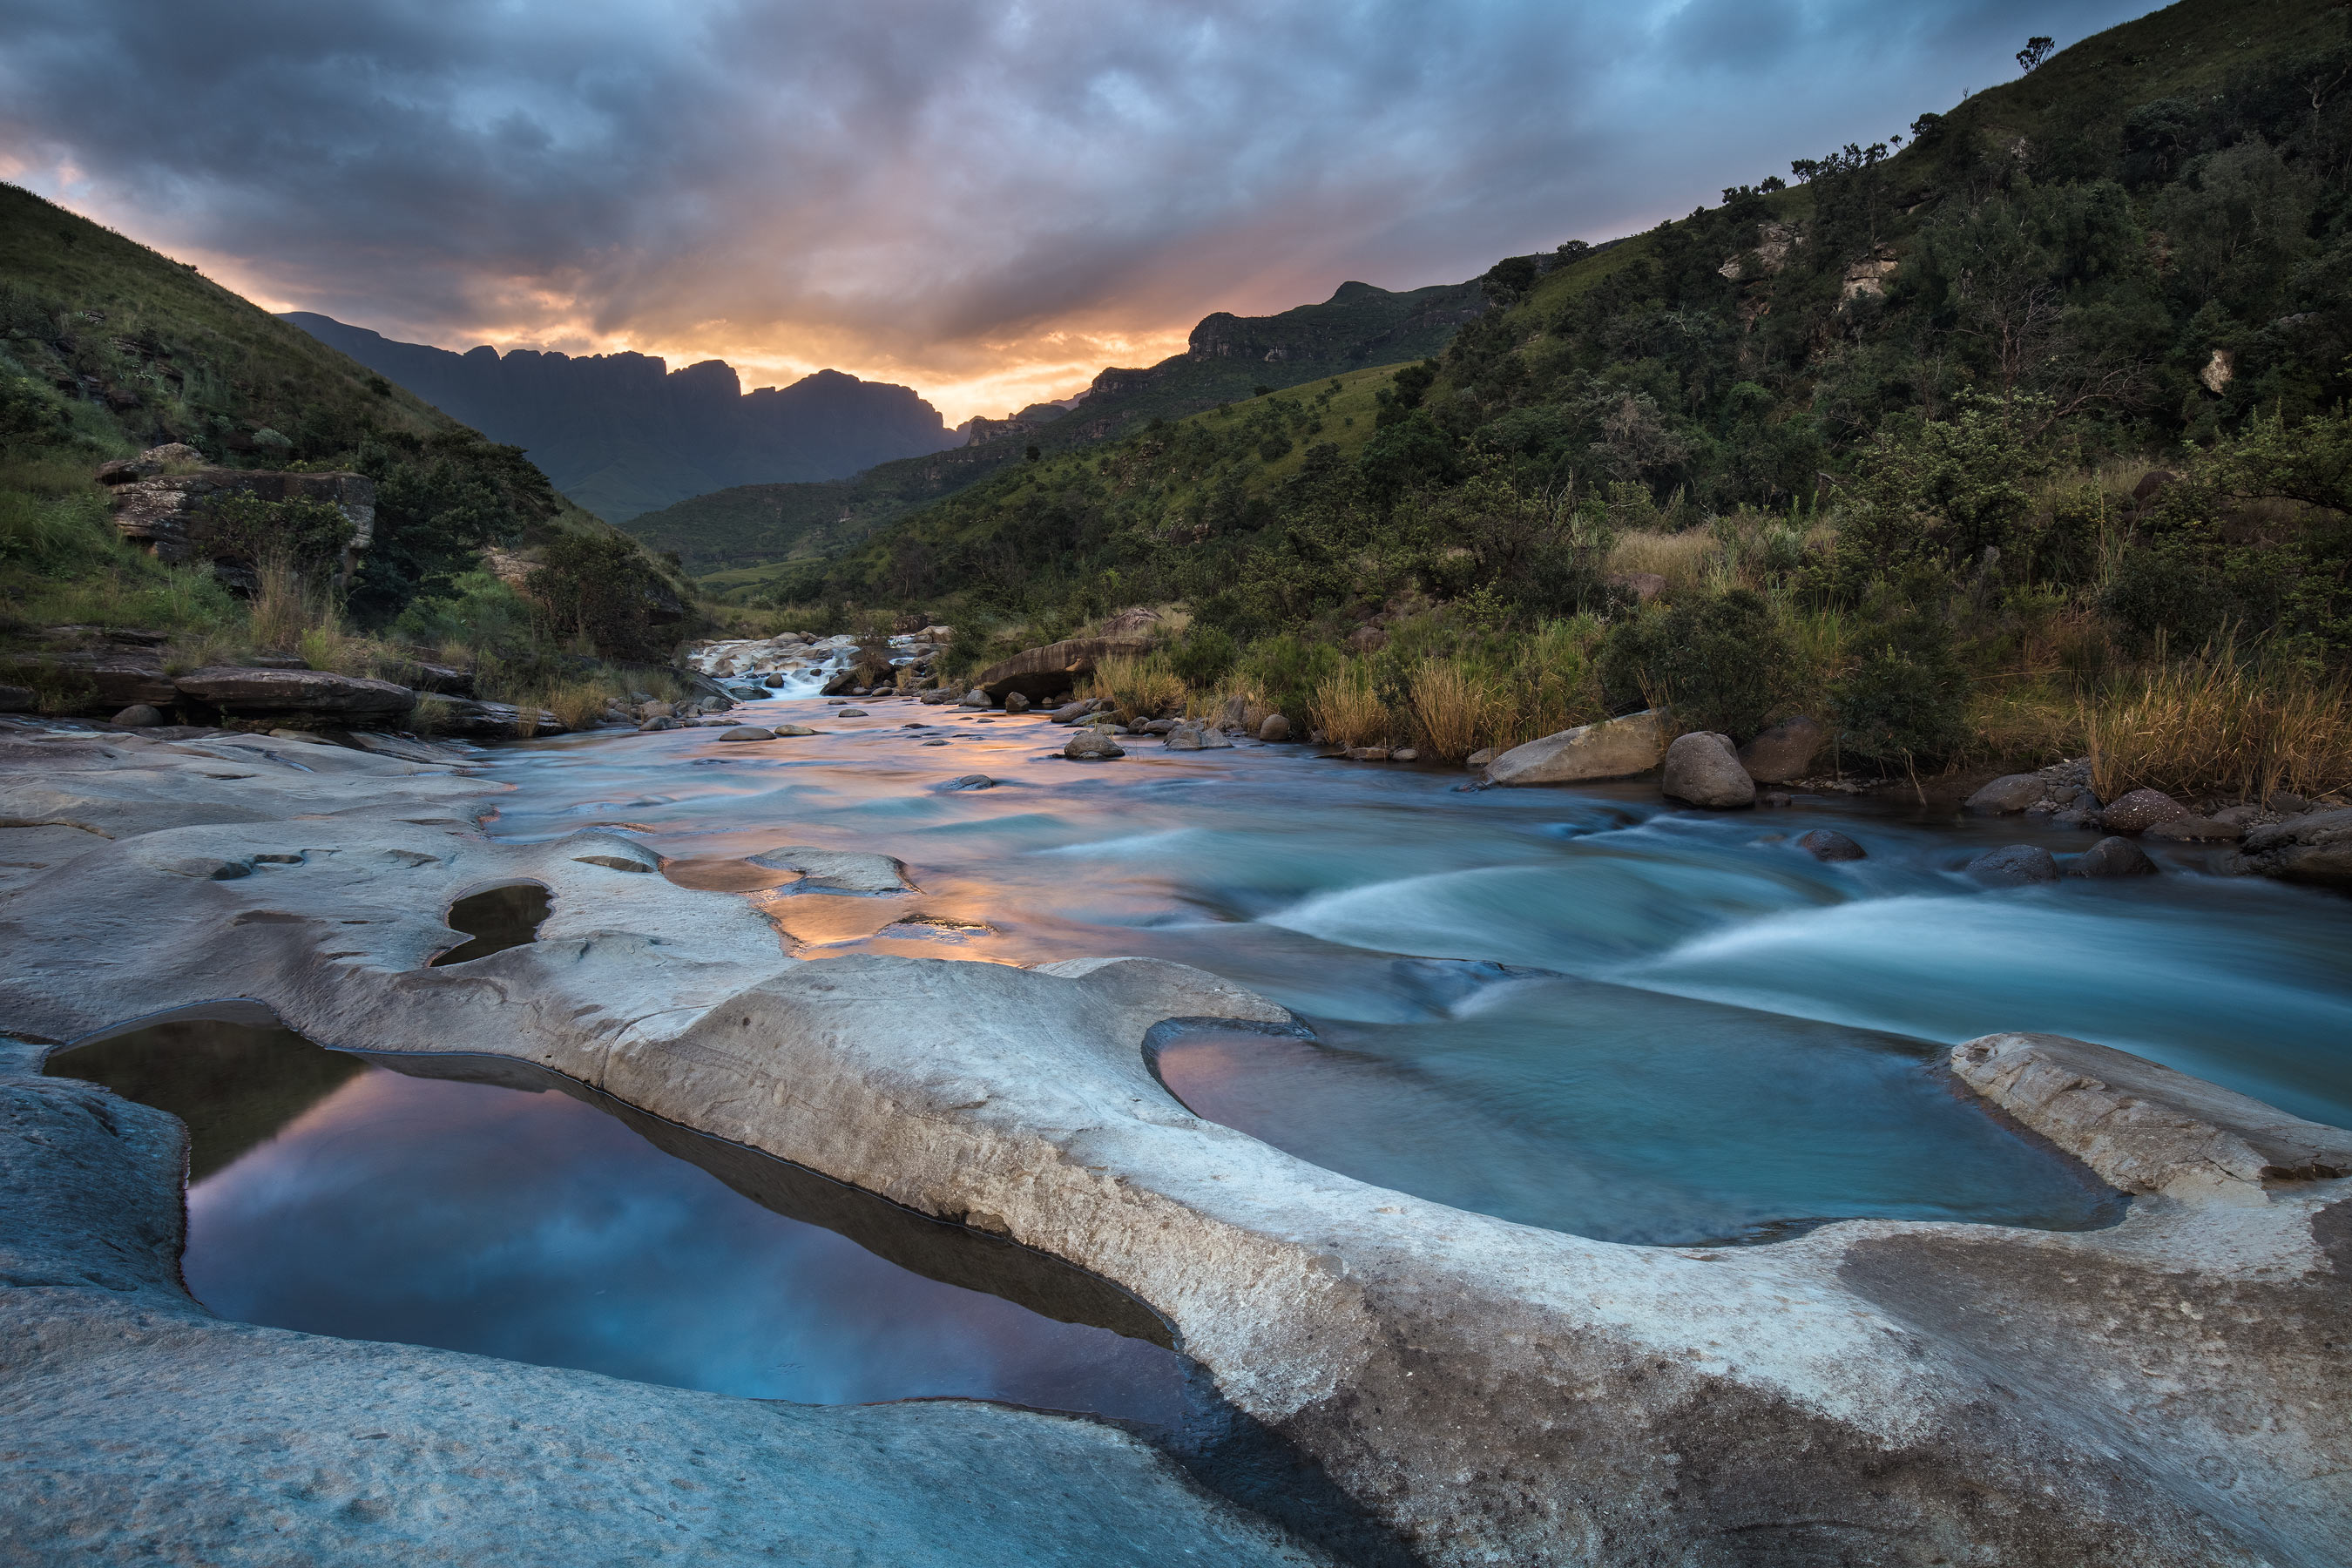 Photo taken at Drakensberg Escarpment, South Africa